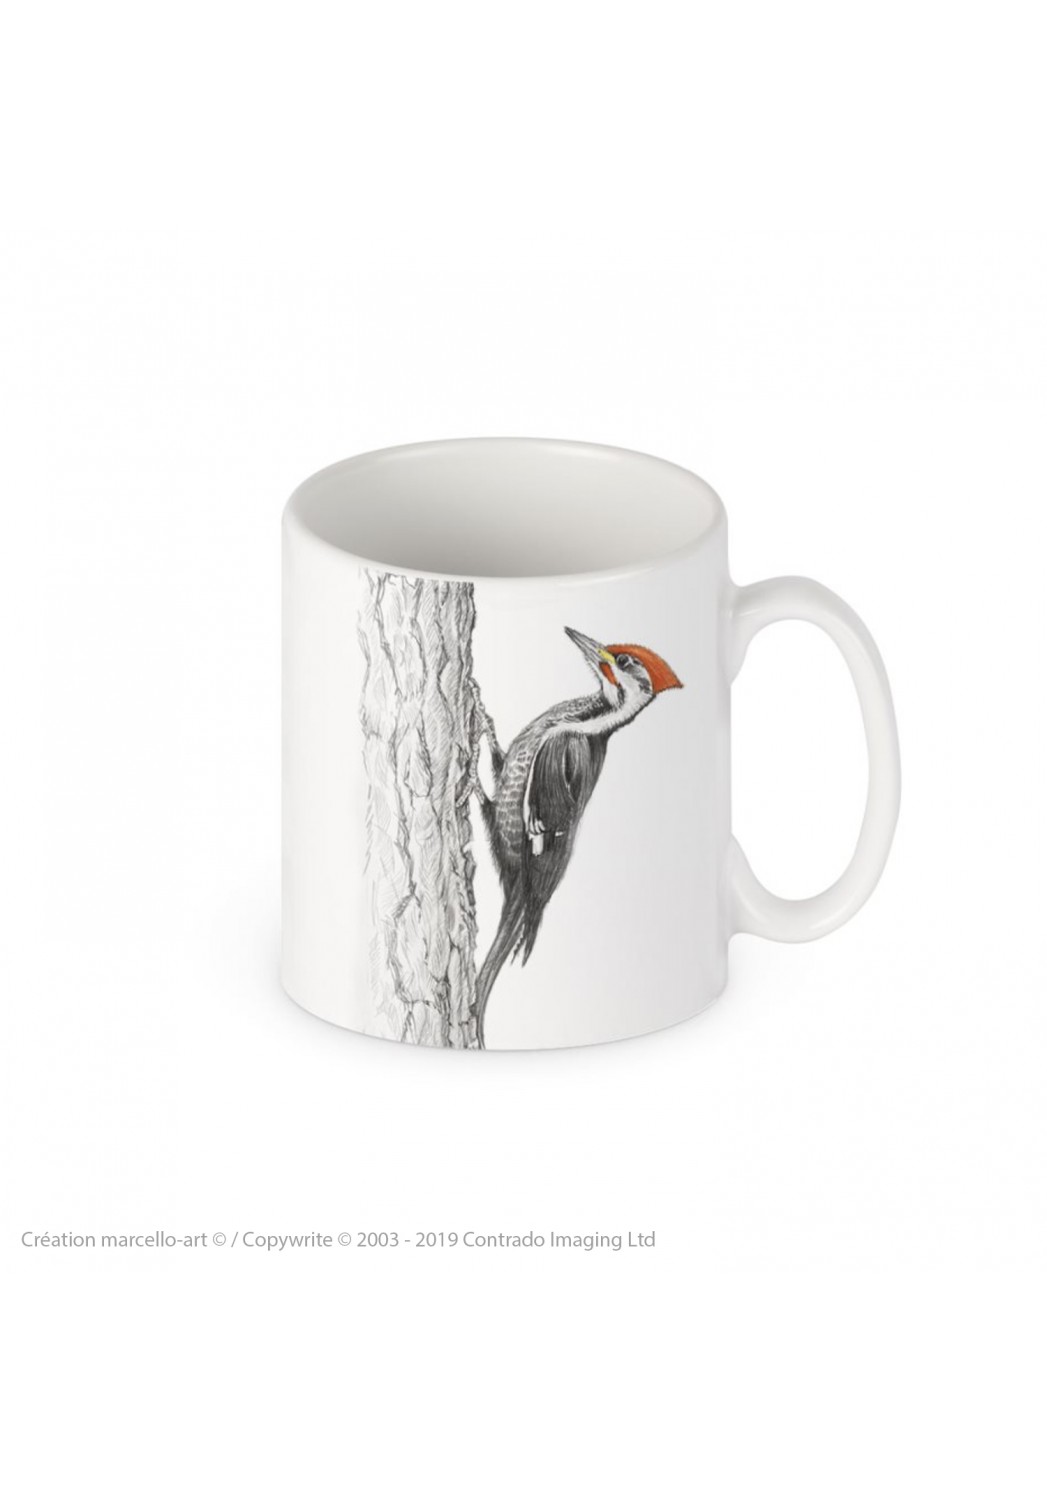 Marcello-art: Decoration accessoiries Porcelain mug 393 black woodpecker